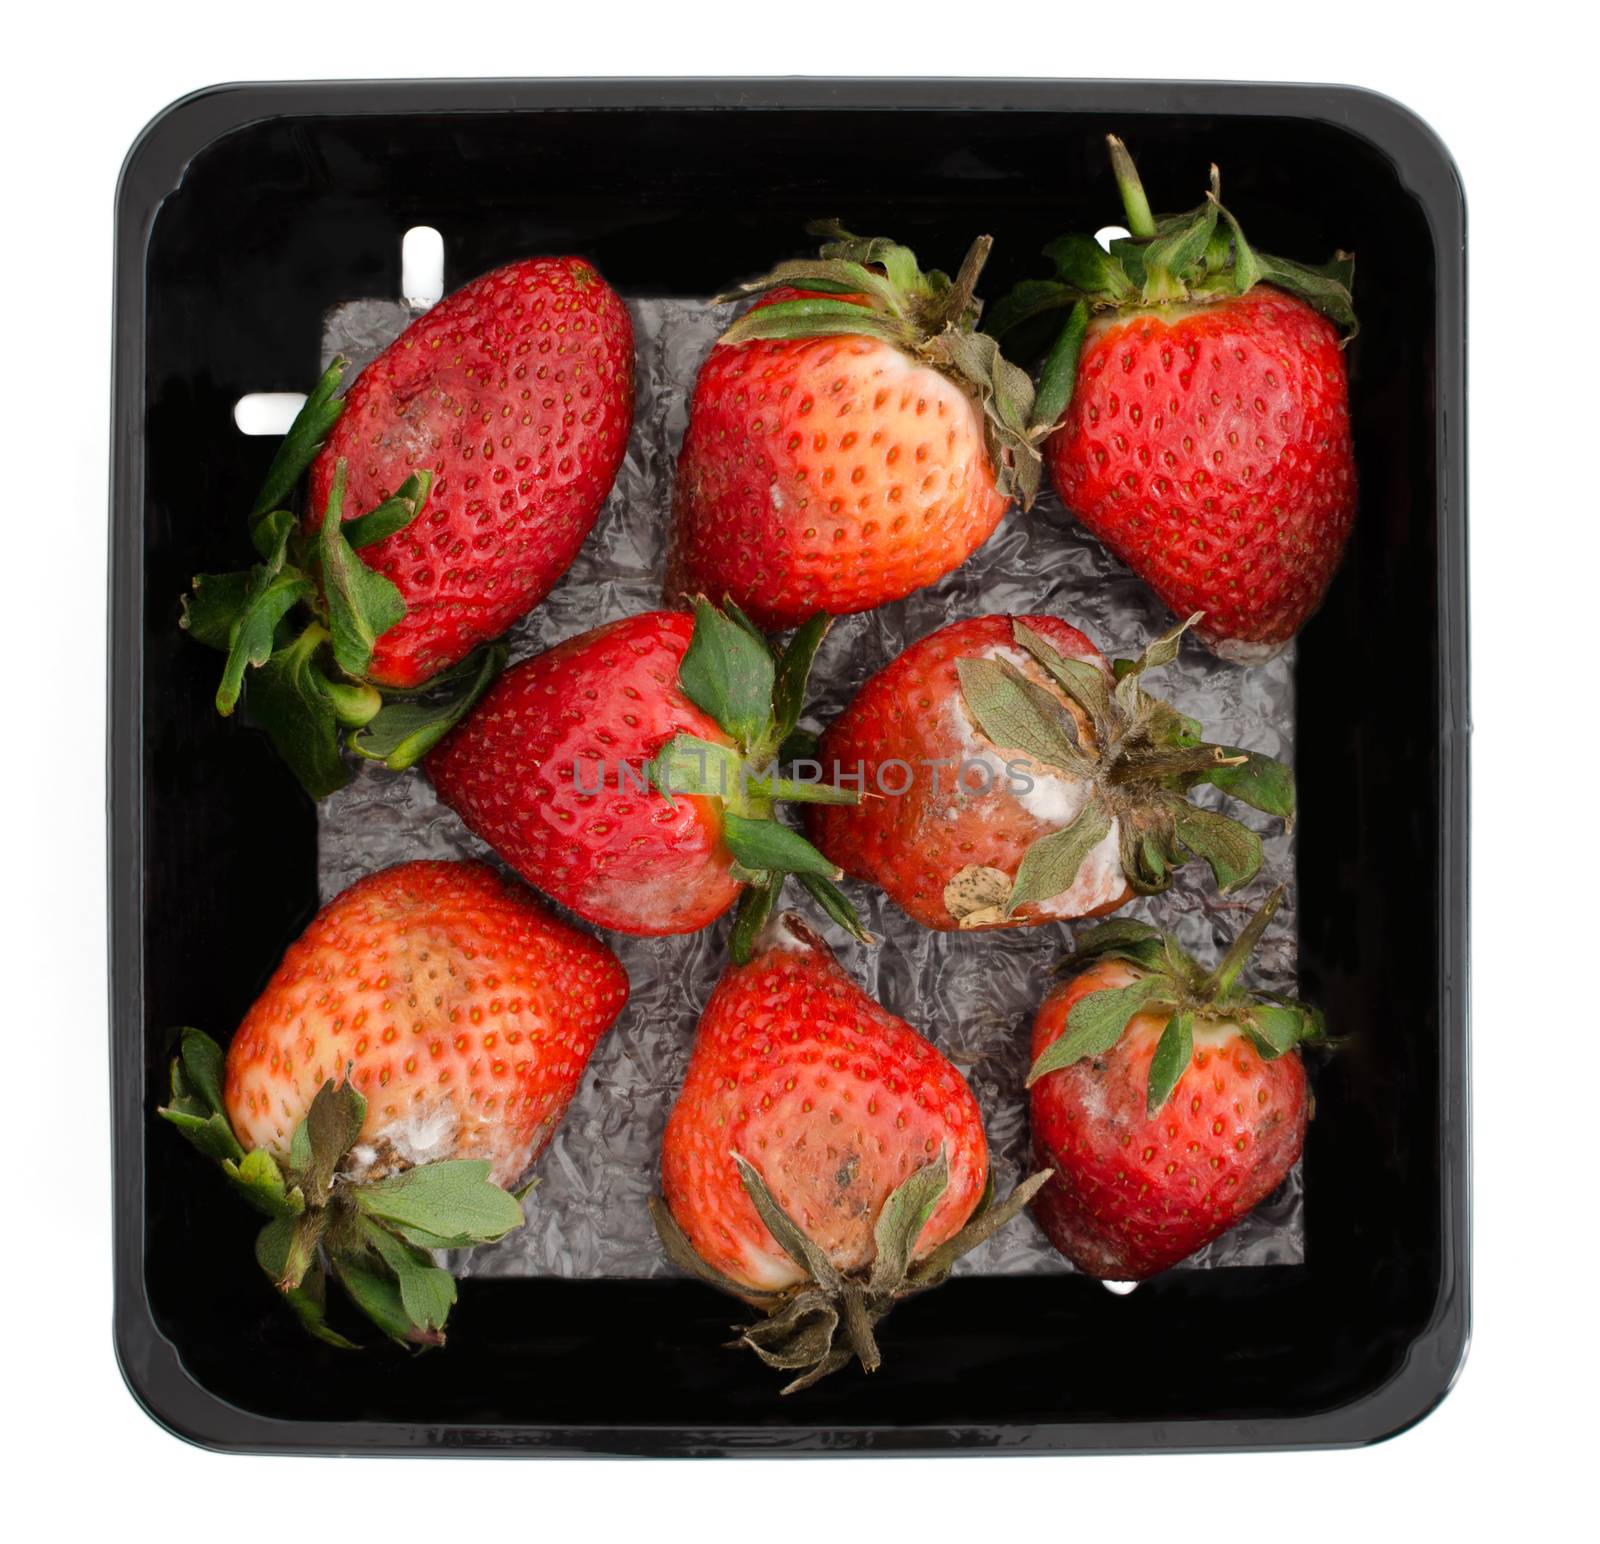 Moldy strawberries by richpav